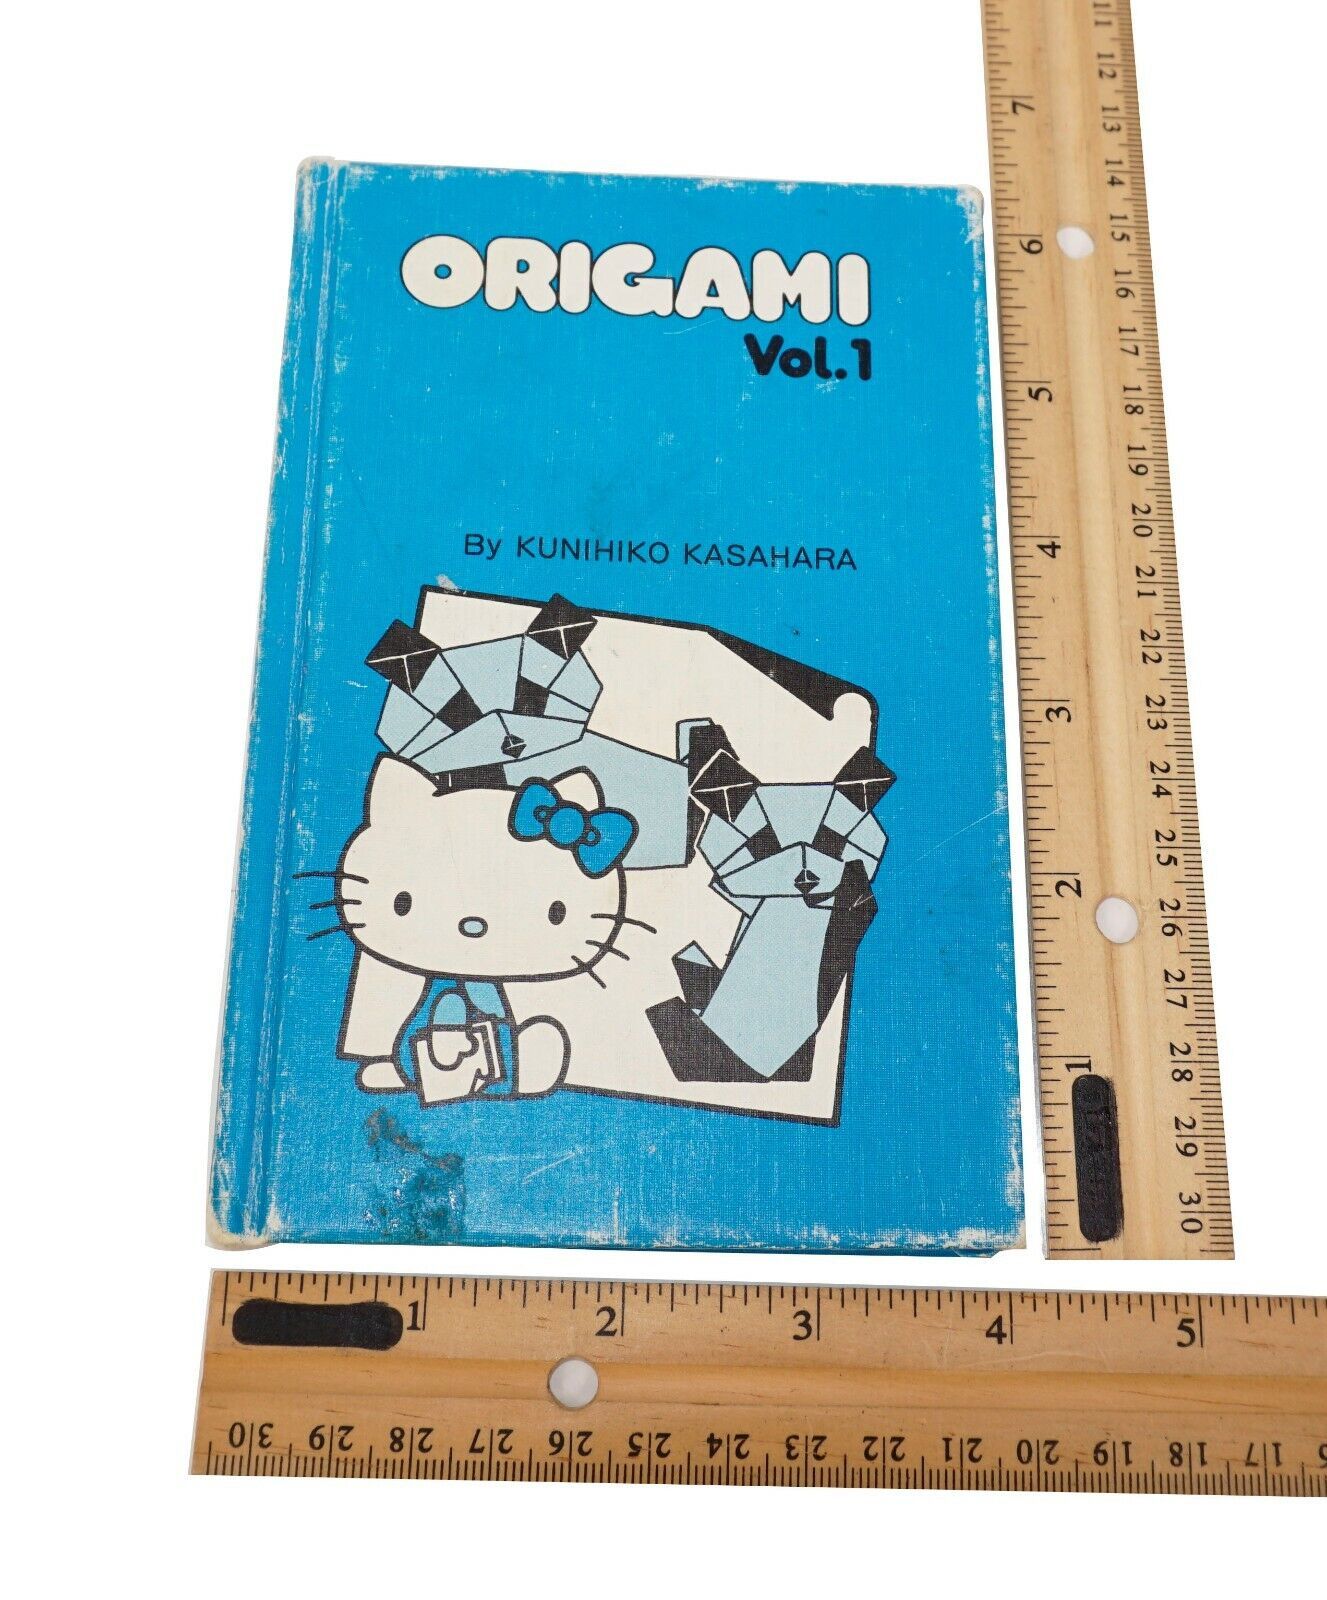 Primary image for RARE Vintage - Sanrio Hello Kitty Origami Vol 1 Book - Kunihiko Kasahara 1978